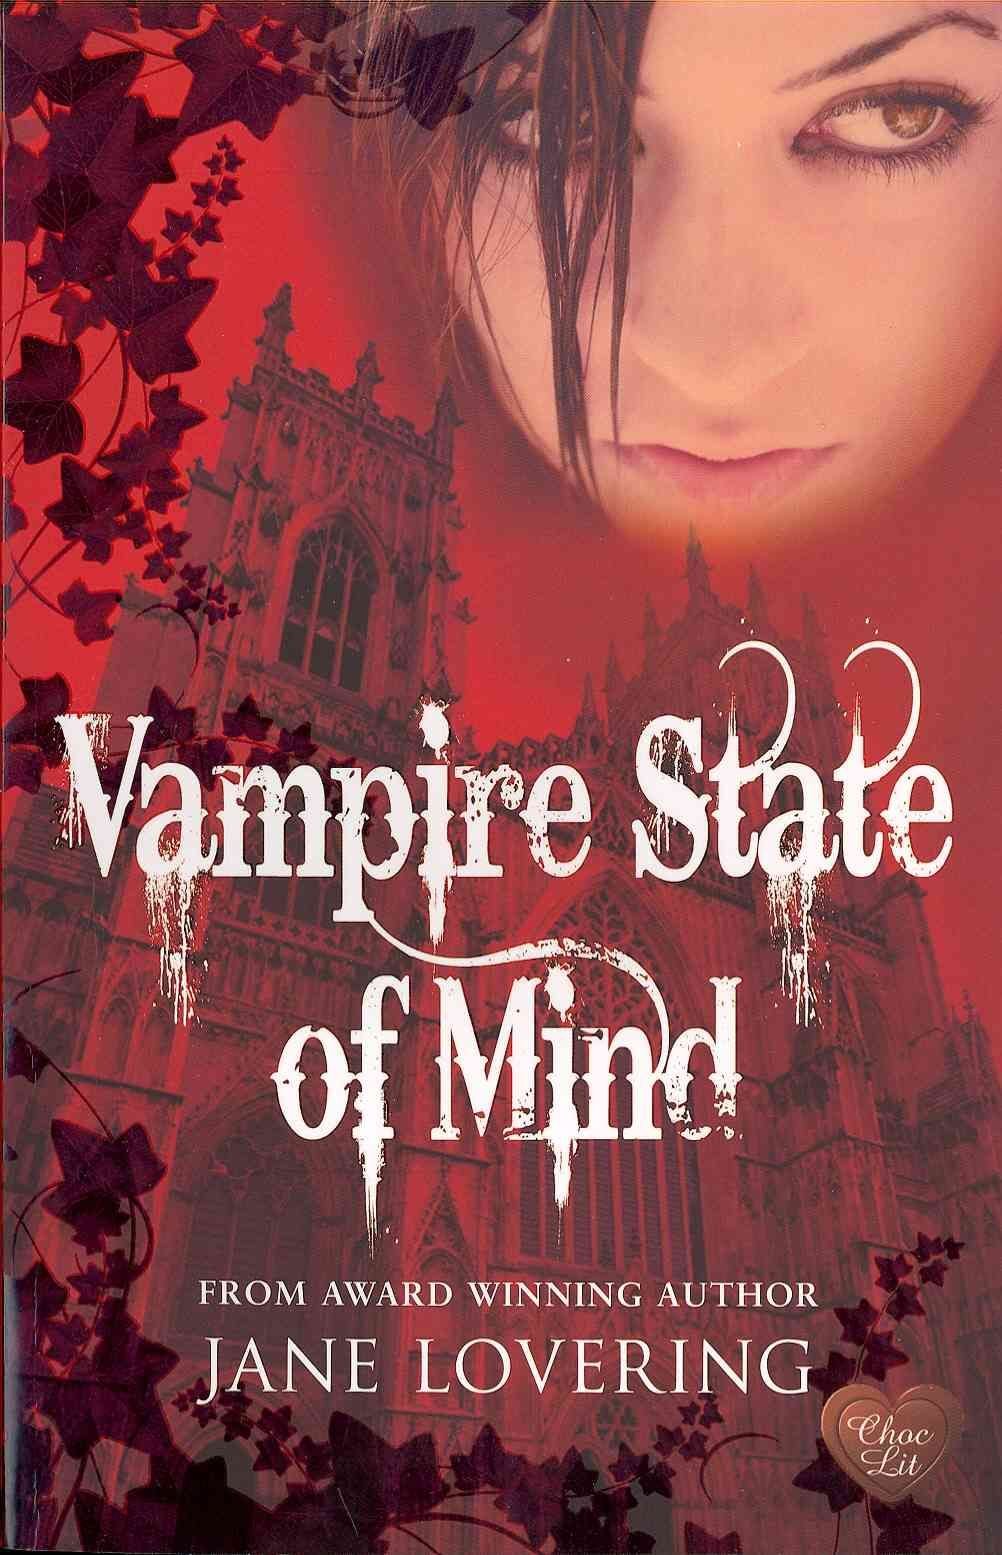 Vampire State of Mind